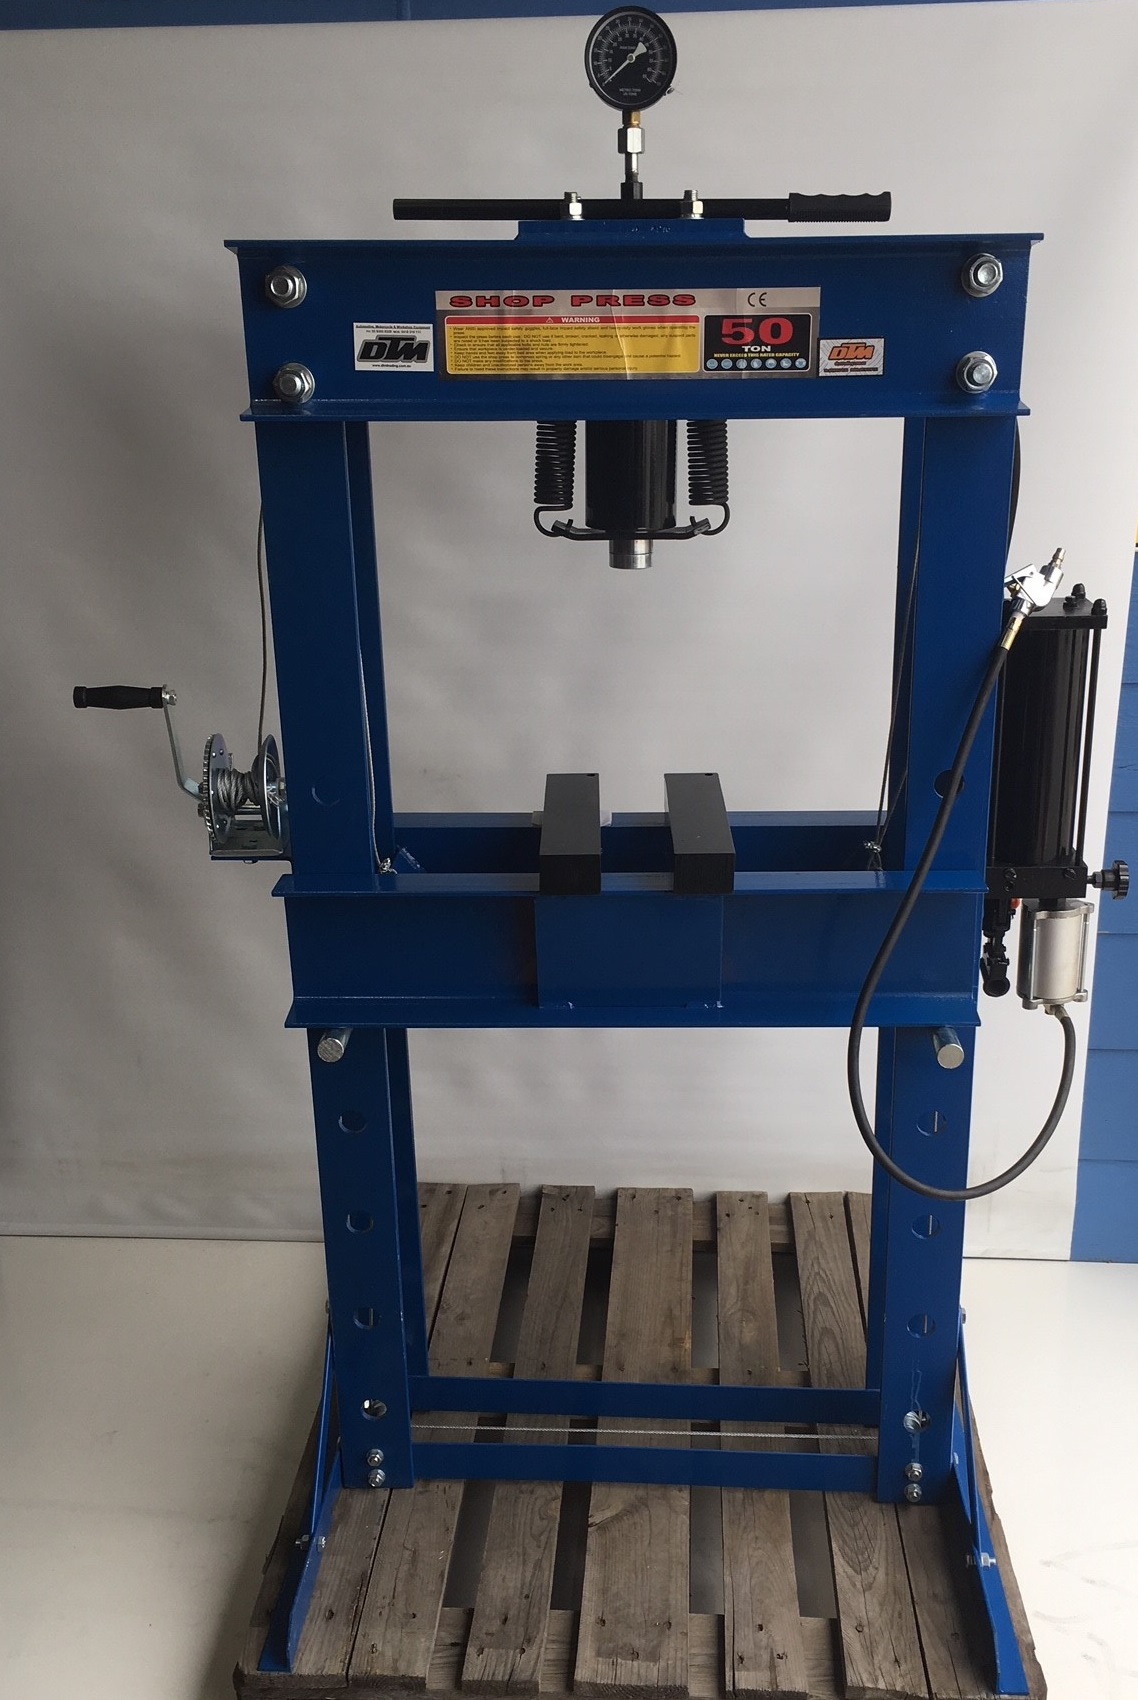 Shop press air/hydraulic pump 50t DTM Trading